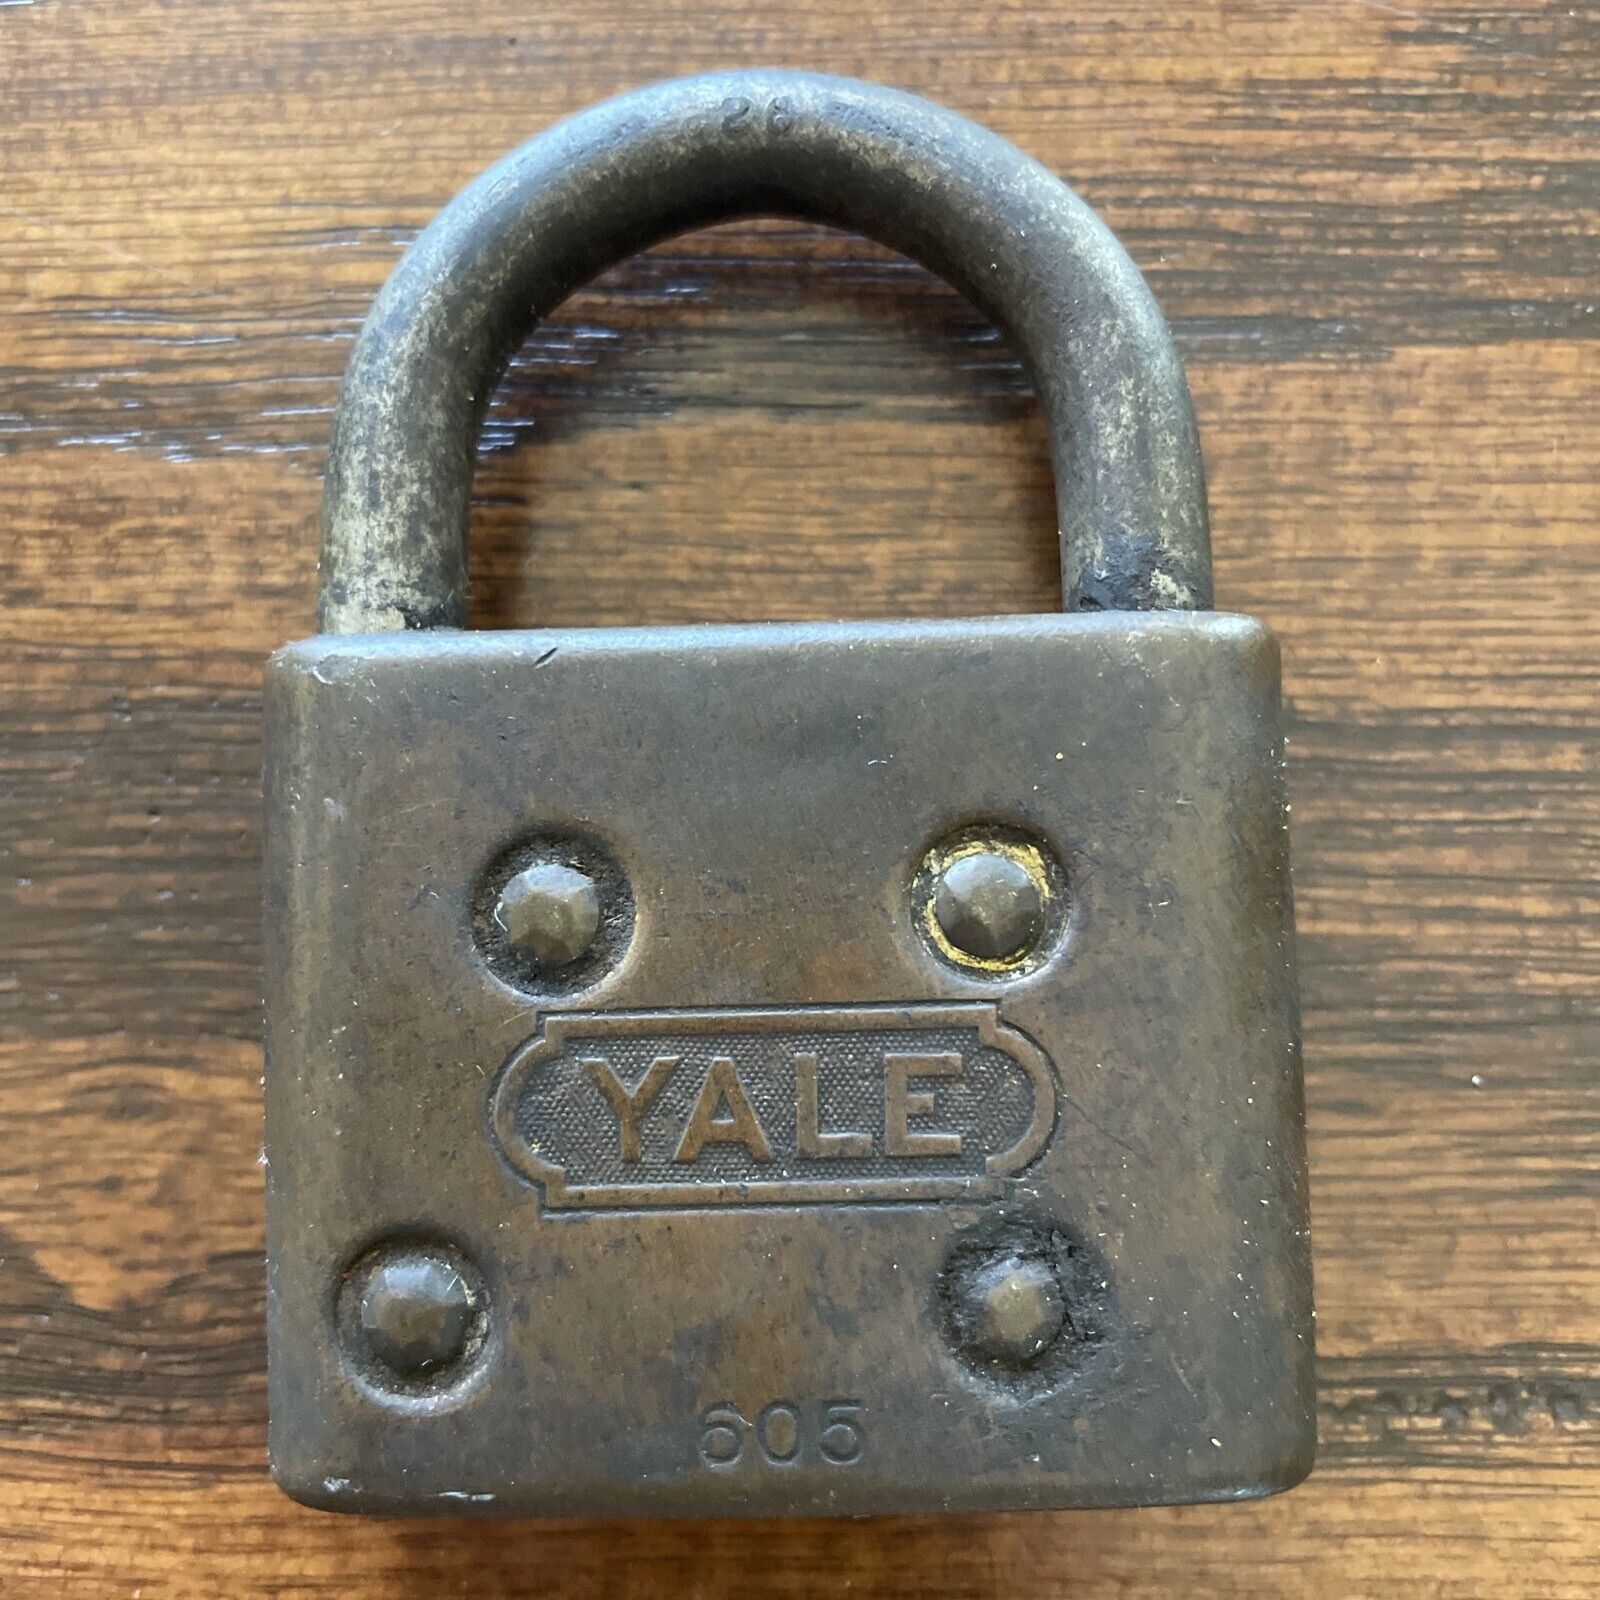 Vintage Antique Yale Padlock marked 605